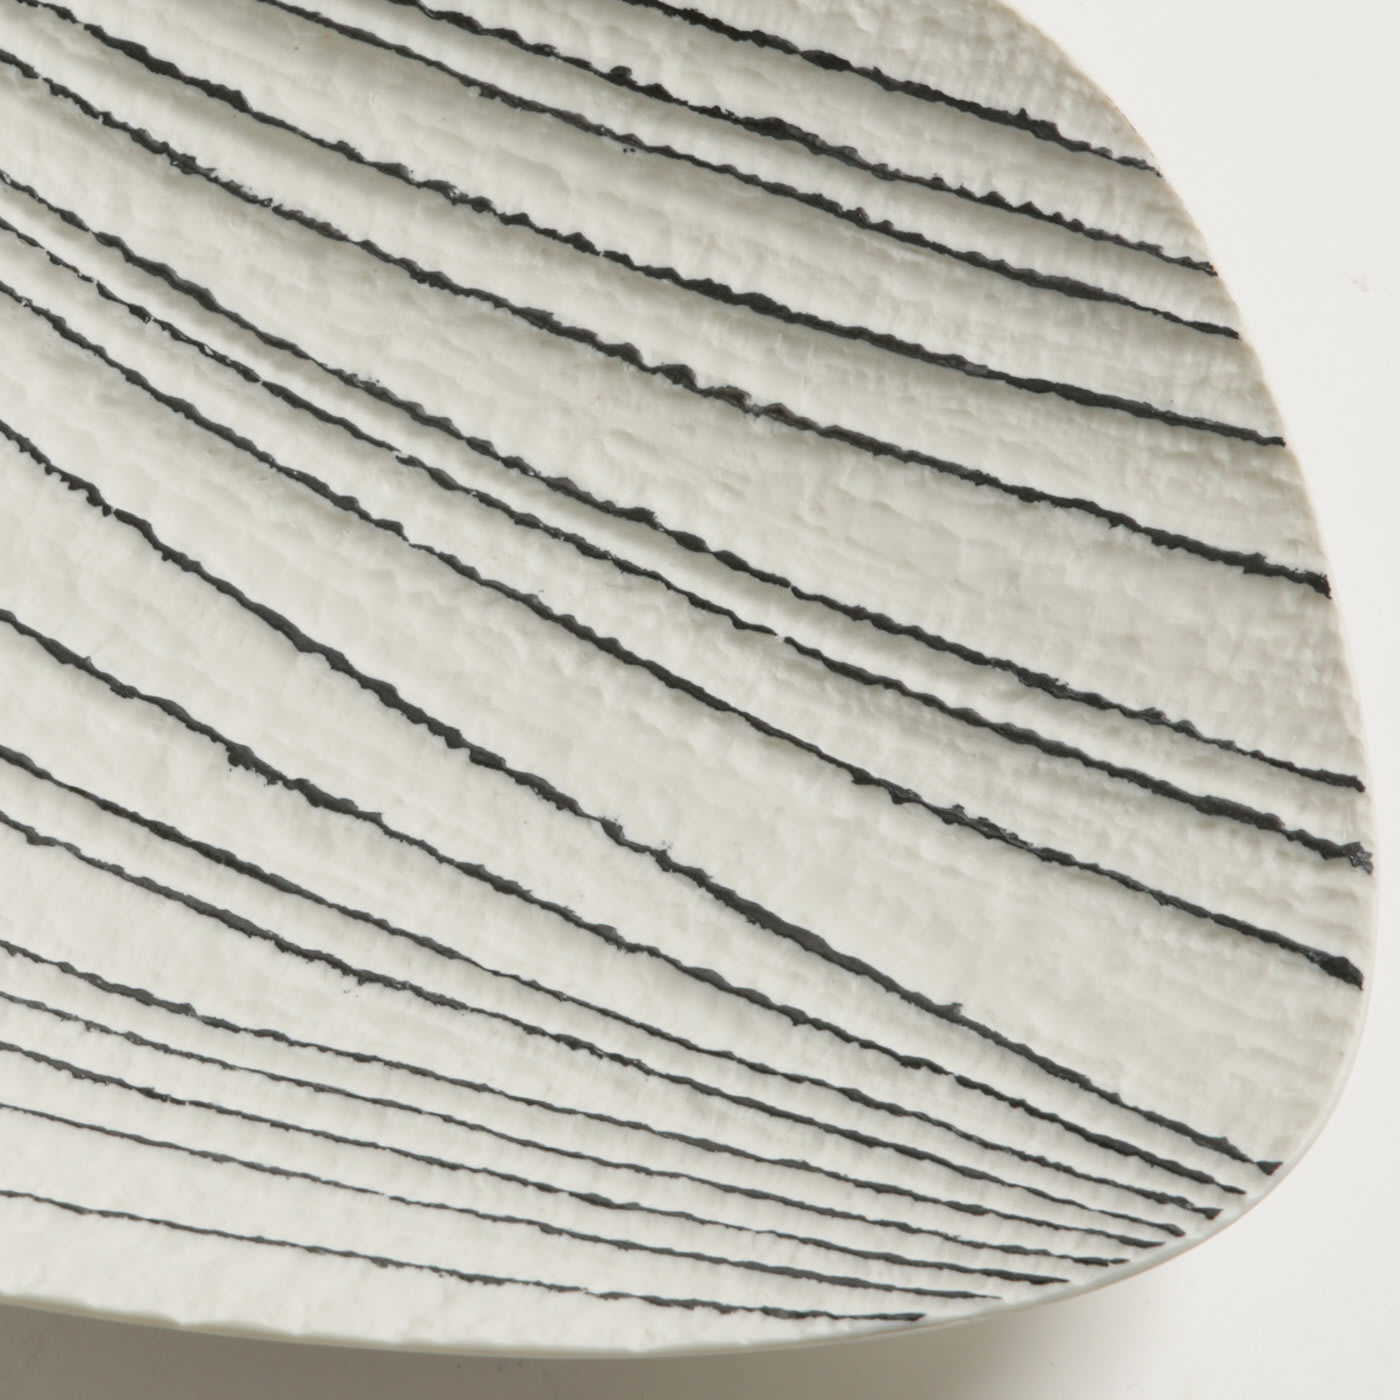 Naum Carved Plate - Fos Ceramiche